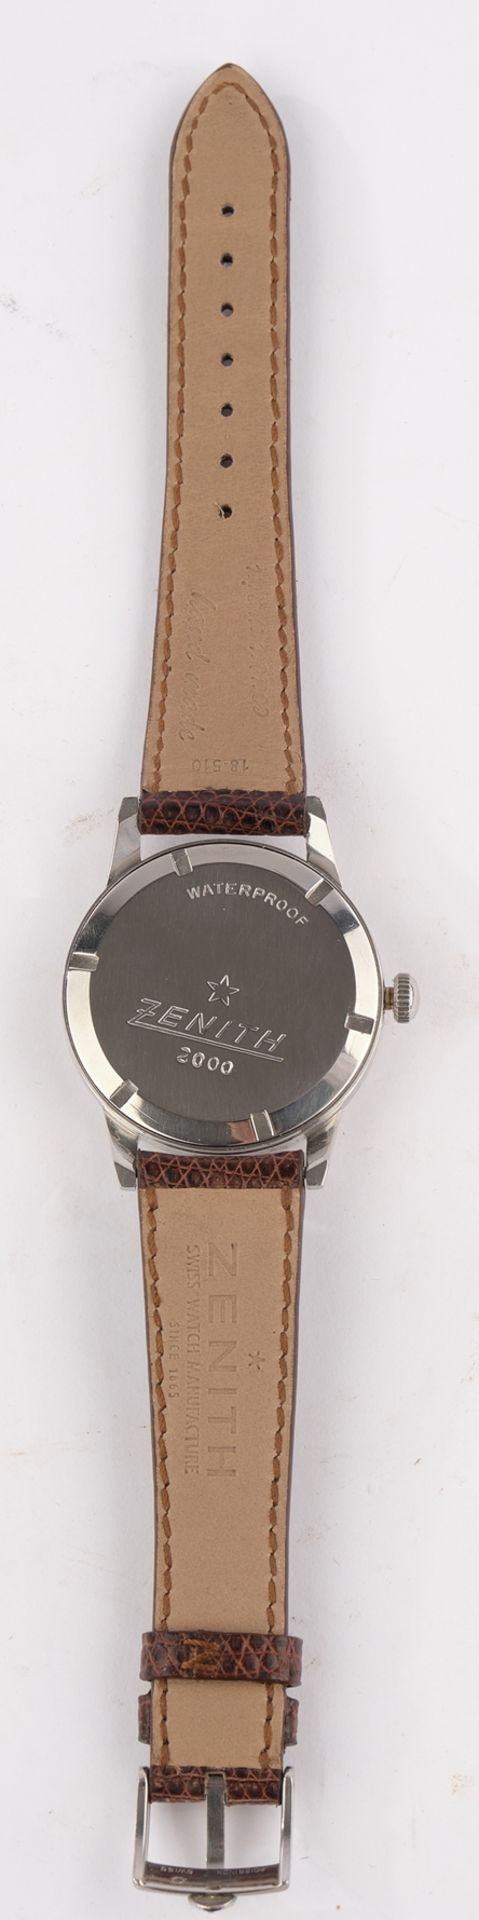 Armbanduhr Zenith 2000 Chronometer, Schweiz, 1960er Jahre, wohl Cal. 135, Handaufzug, neuwertiges b - Image 3 of 7